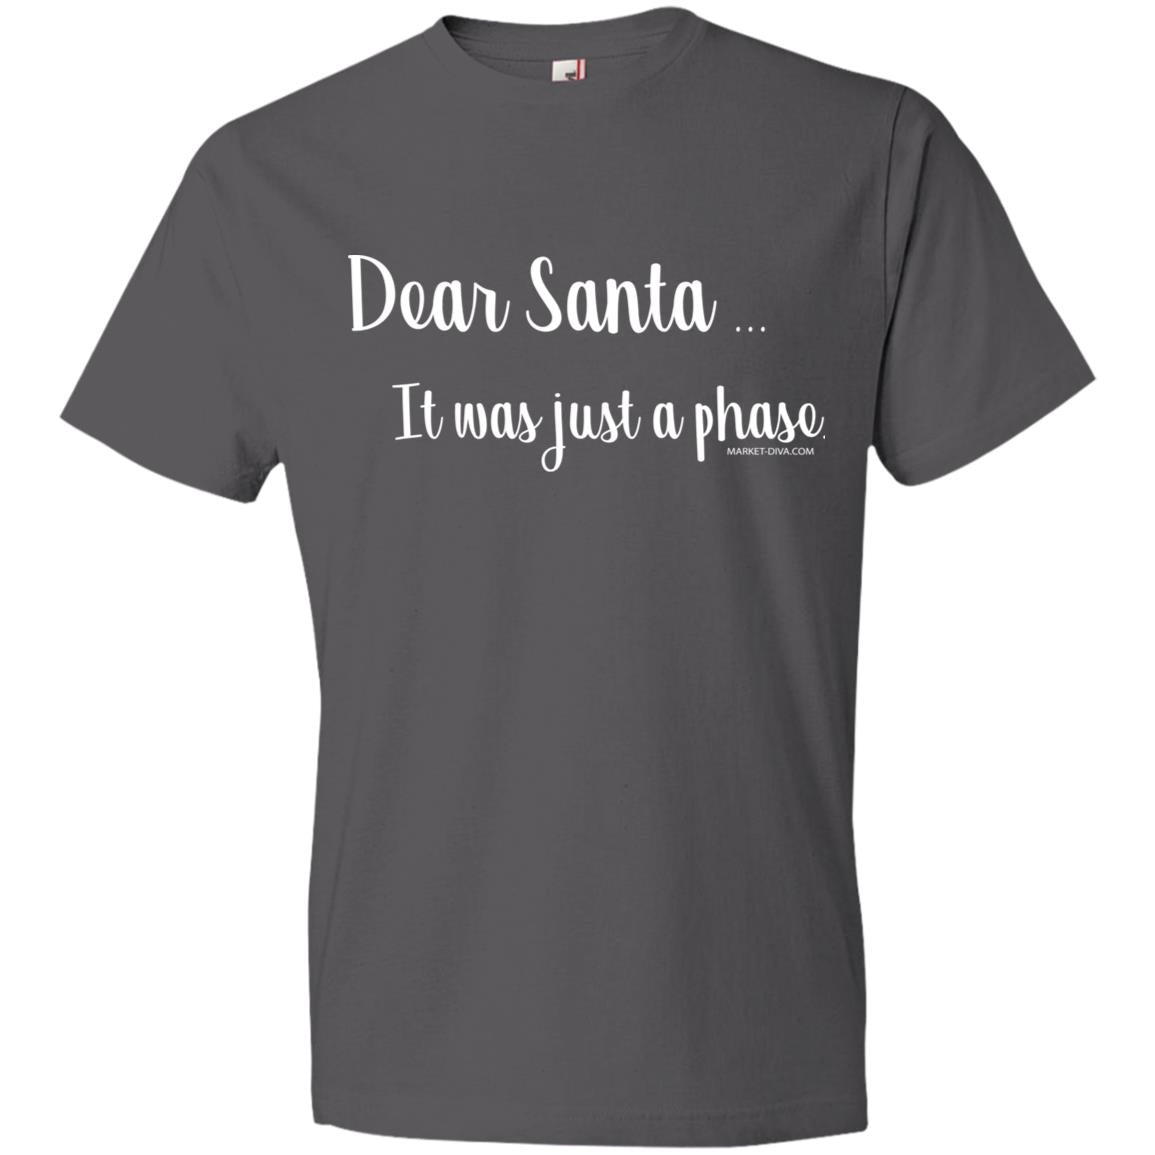 Christmas: Dear Santa - It was just a phase